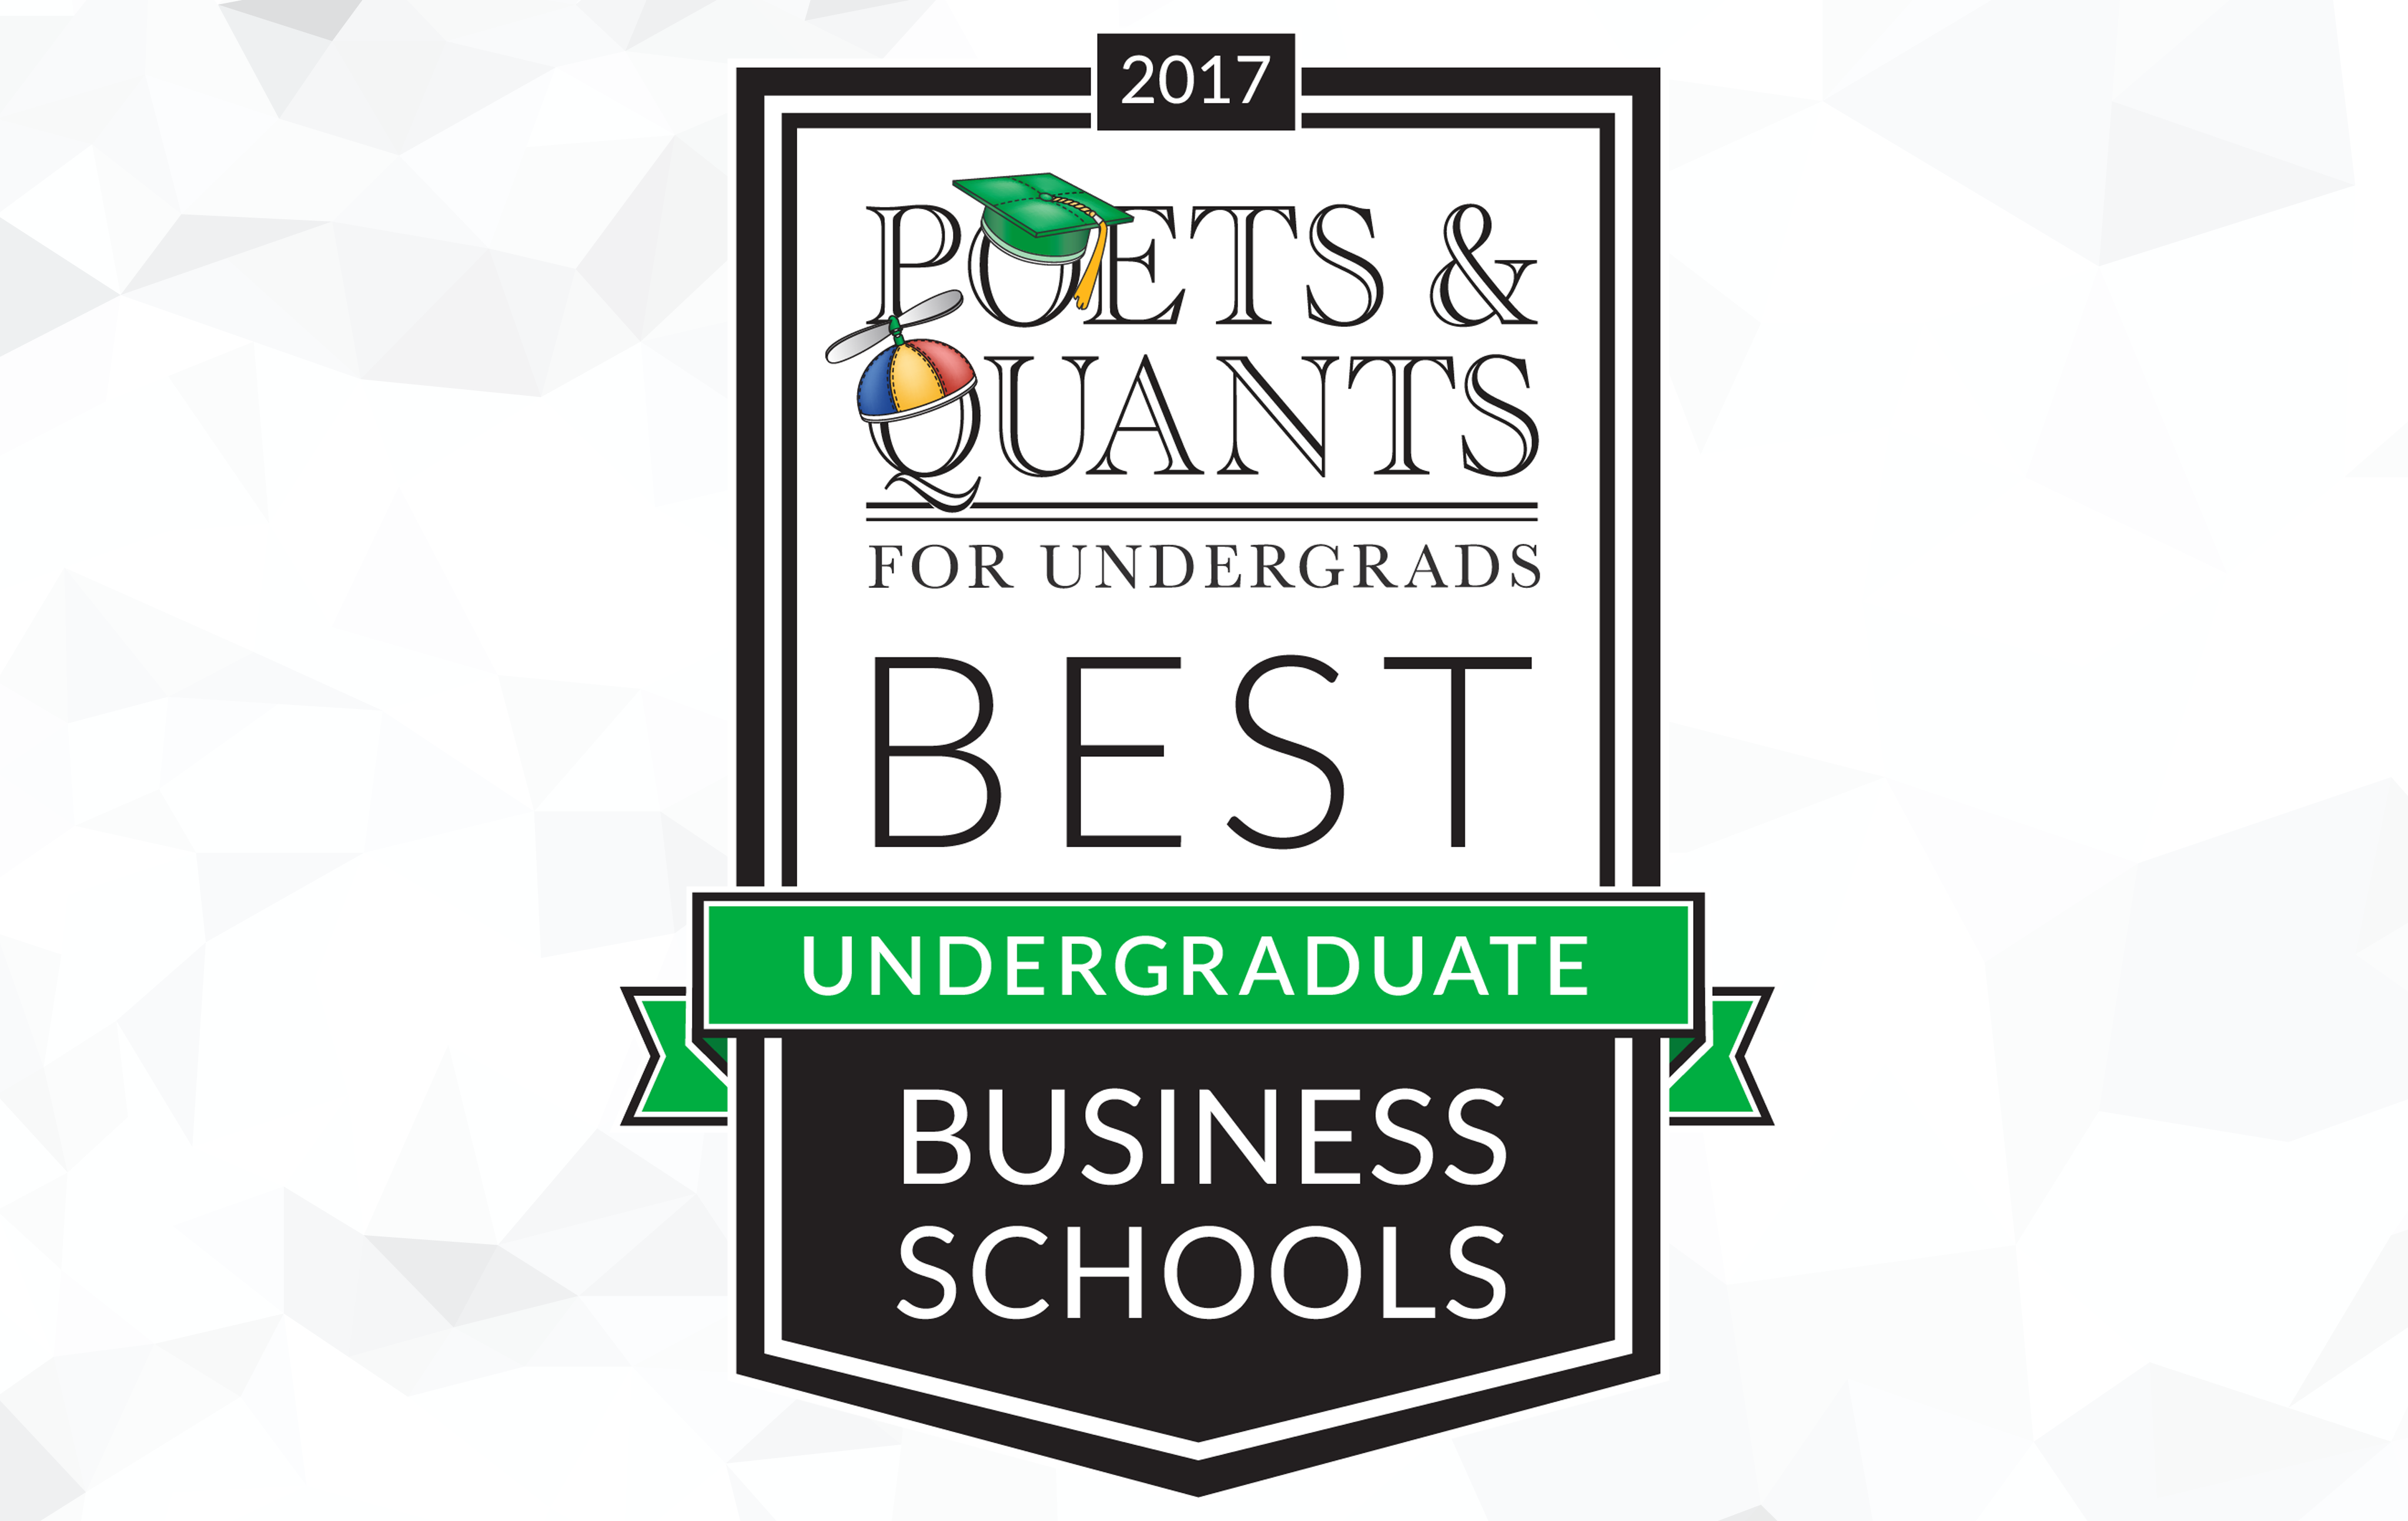 Poets & Quants undergrad ranking logo 2017 image link to story